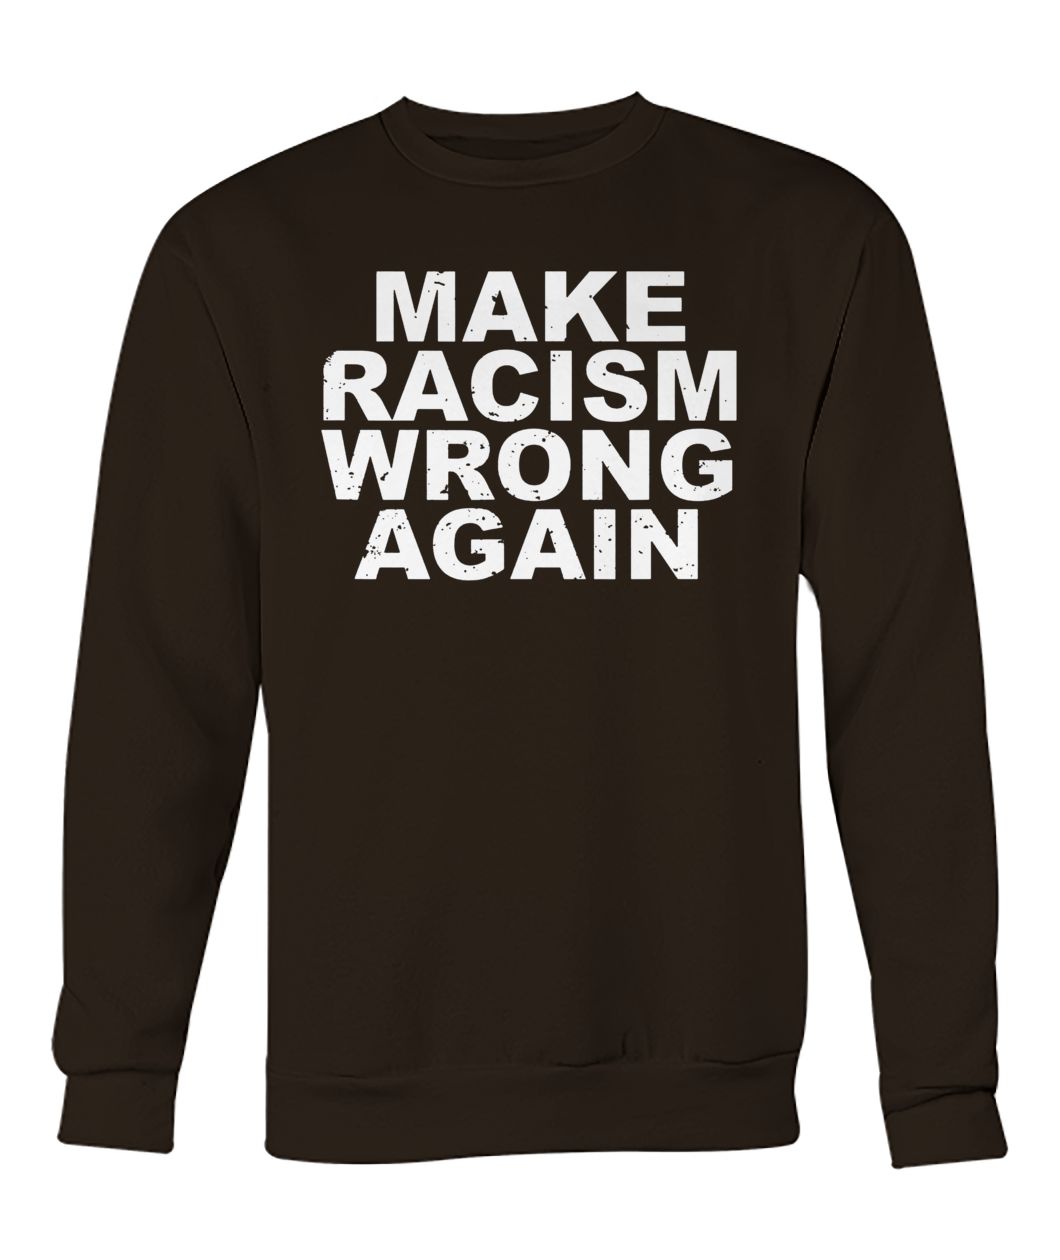 Make racism wrong again anti racism crew neck sweatshirt